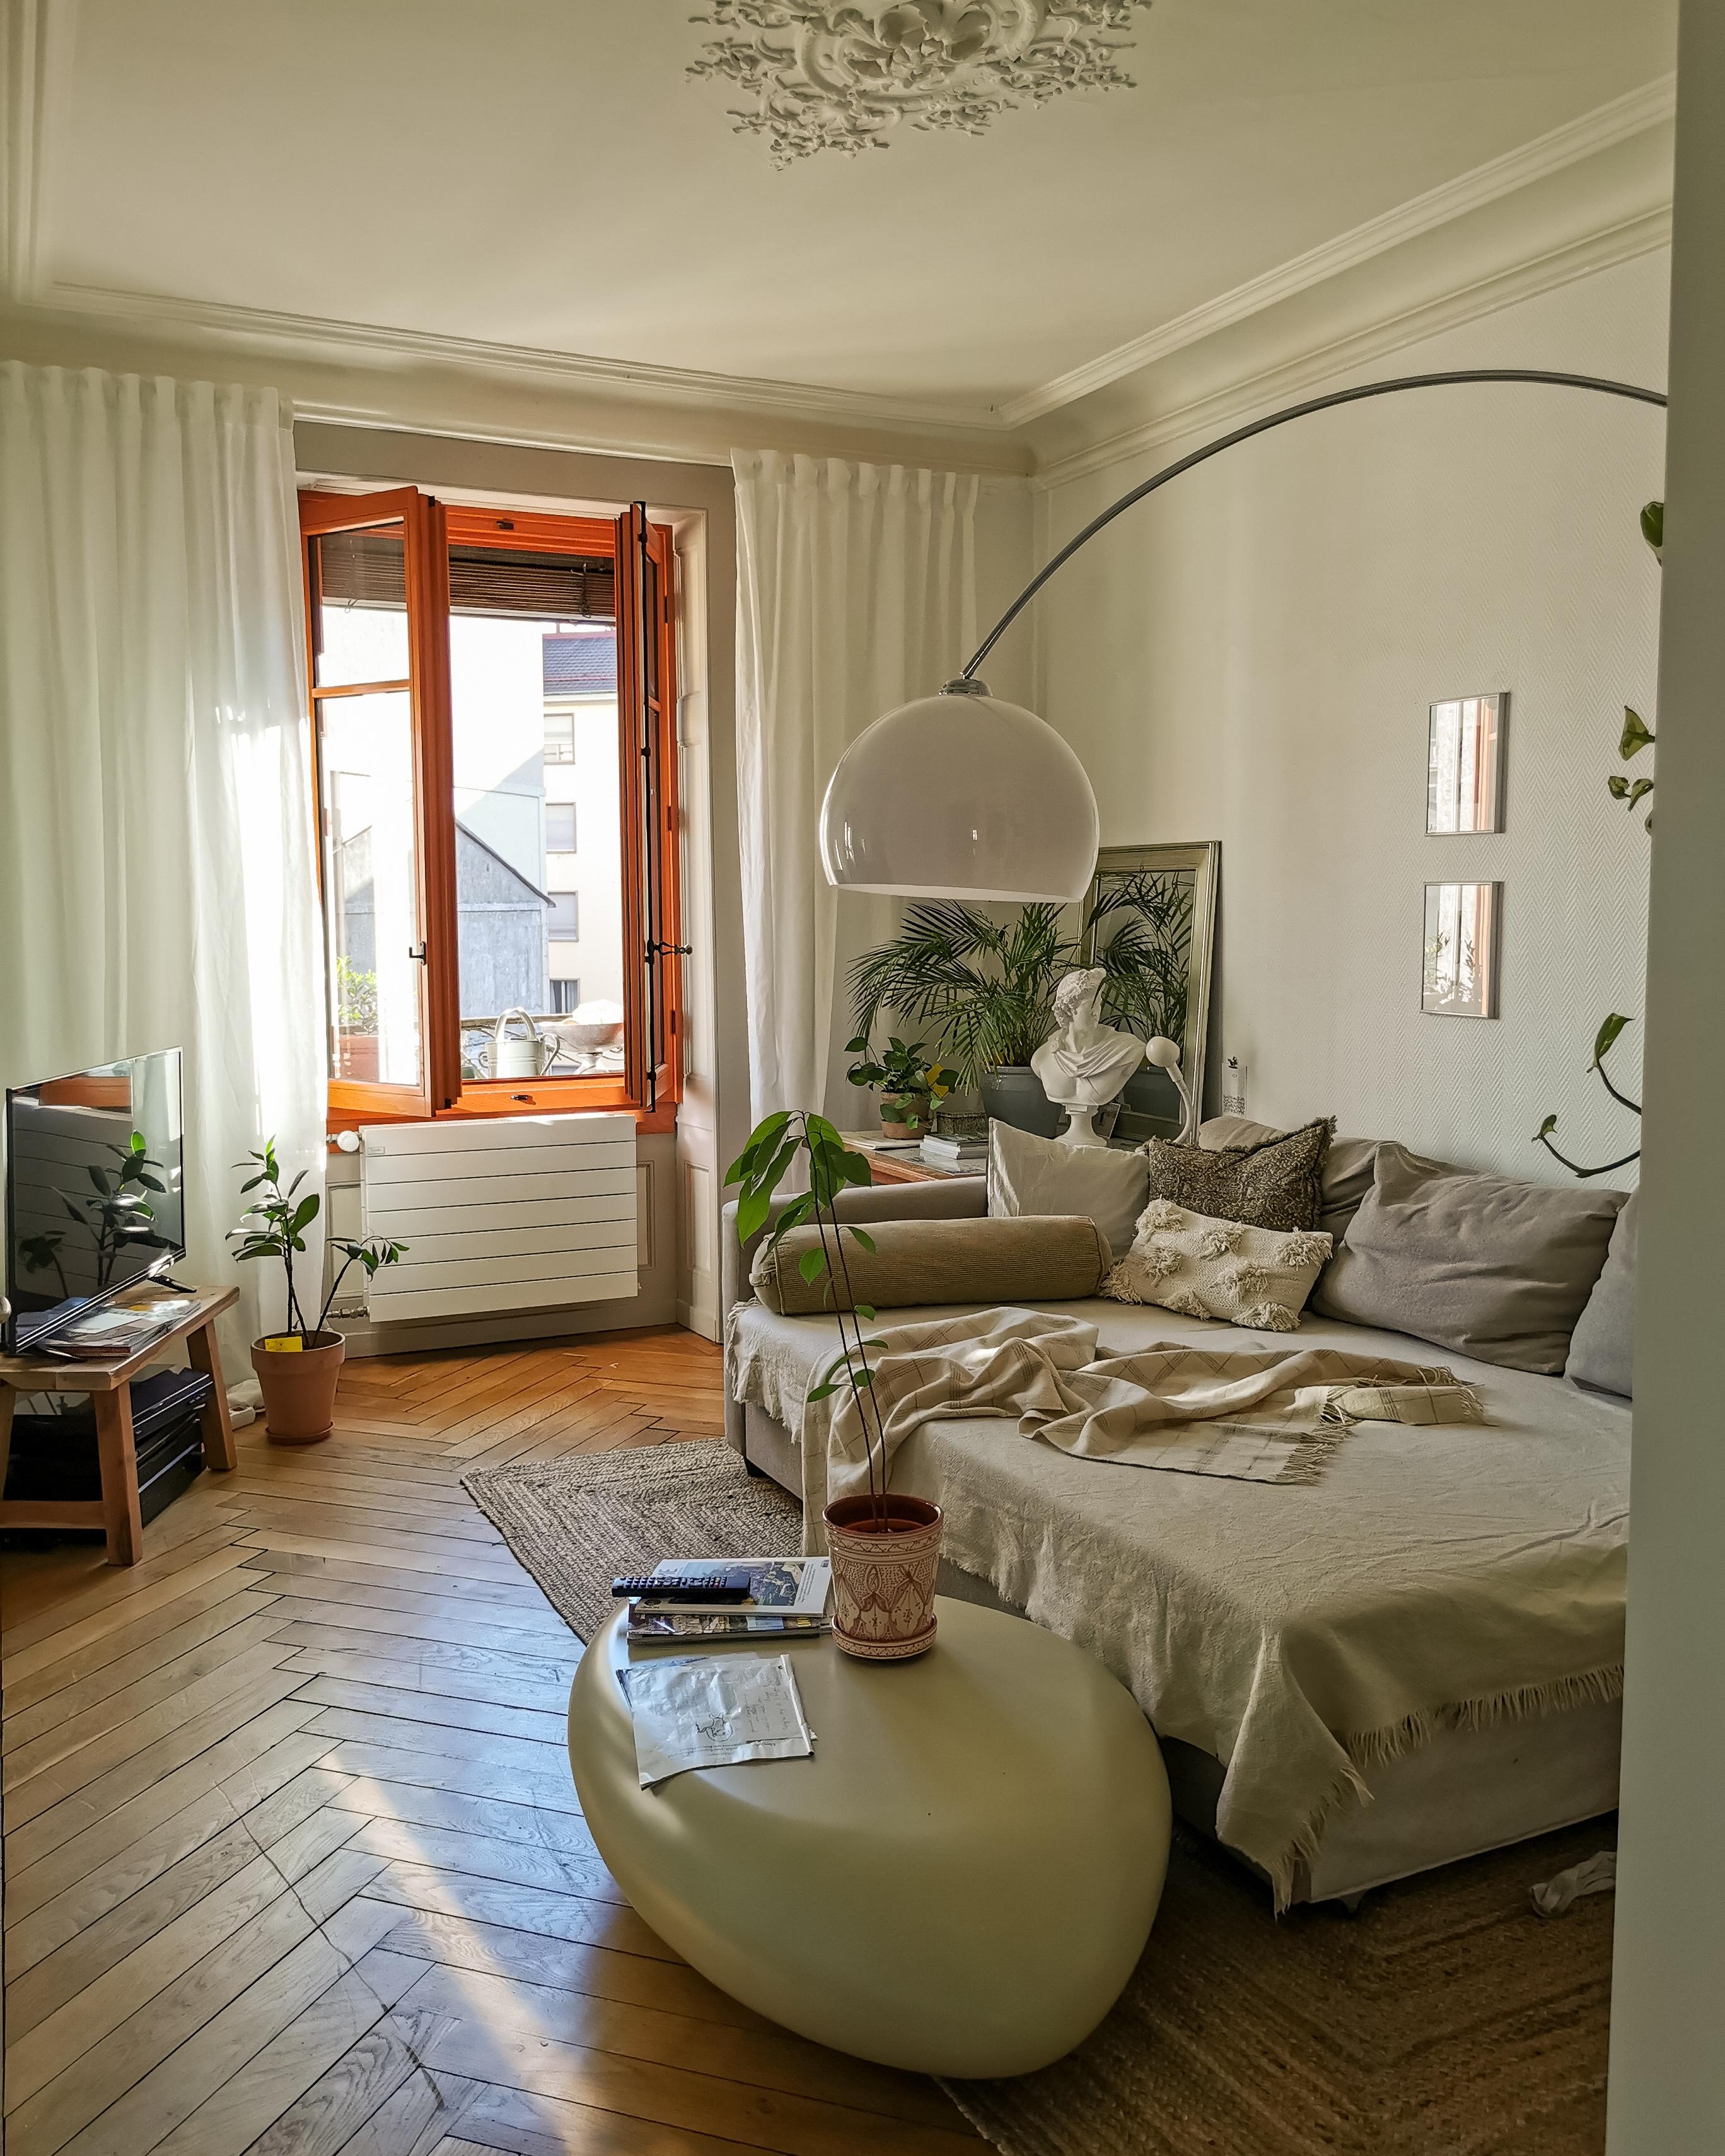 Good morning ☕ #schlafsofa #livingroom #wohnzimmer #beige #bogenlampe 